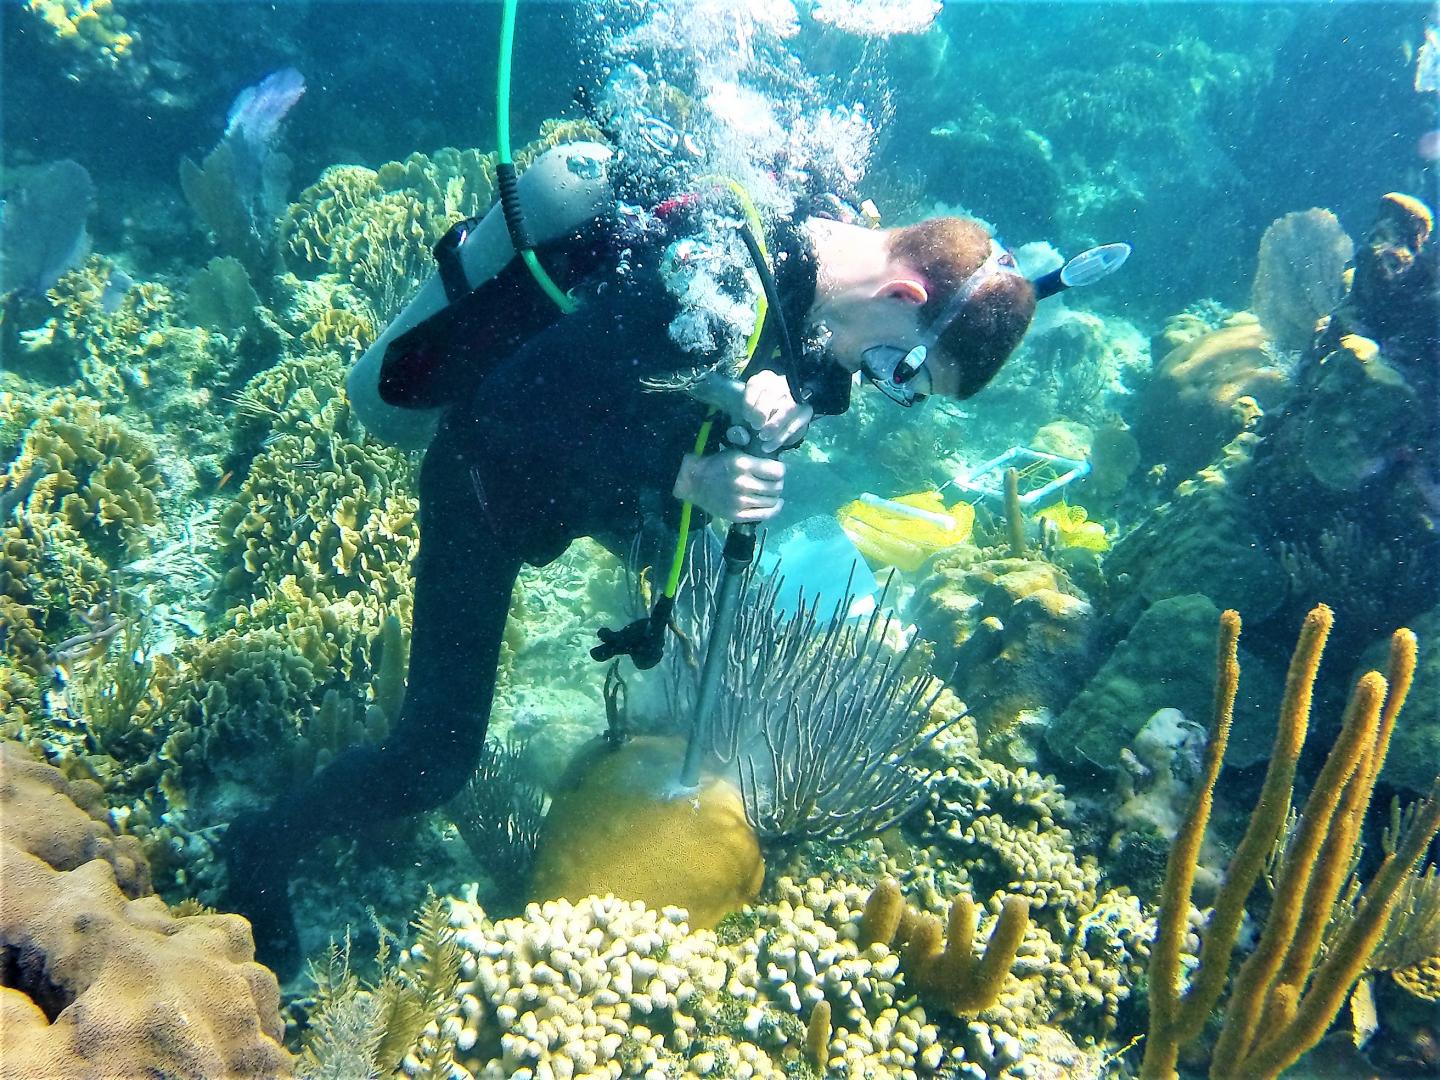 Justin Baumann Drills a Coral Core in Belize